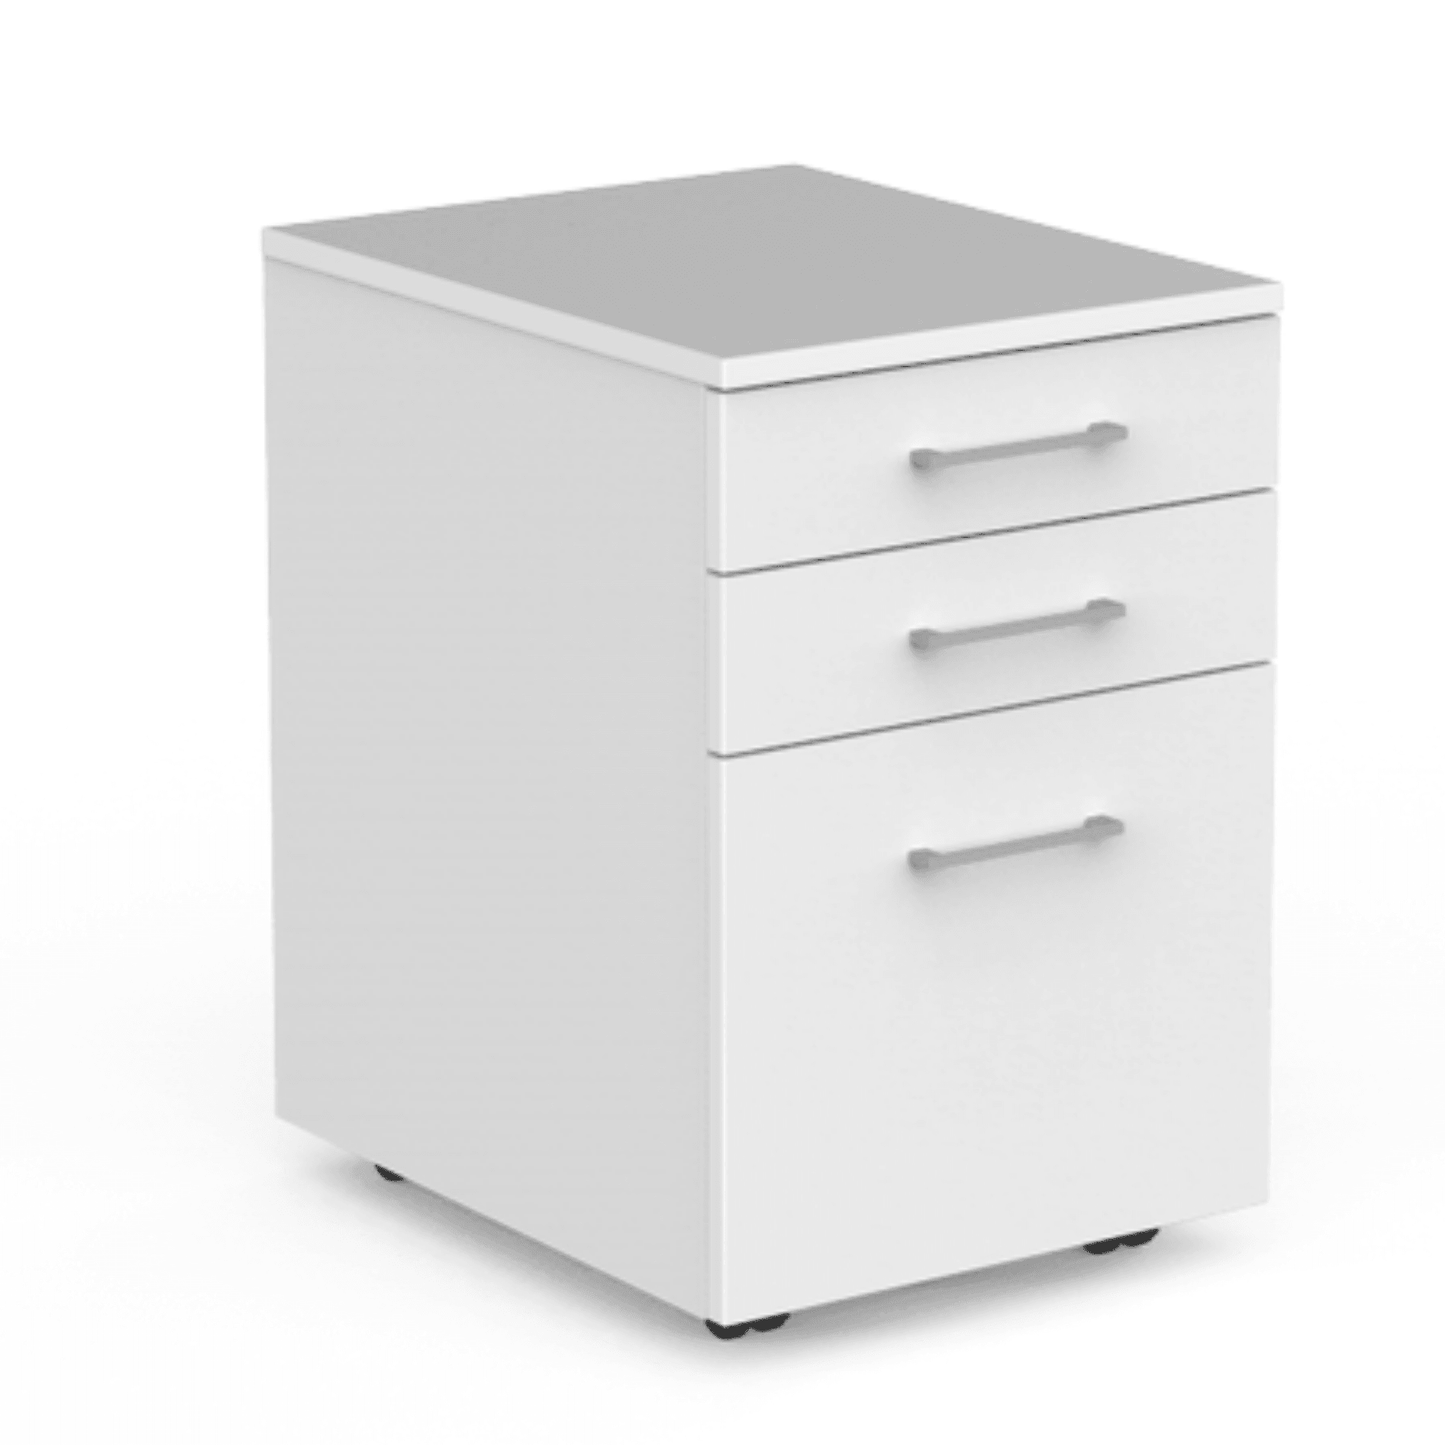 Eko System Mobile 2 Drawer & File Unit - Office Furniture Company 